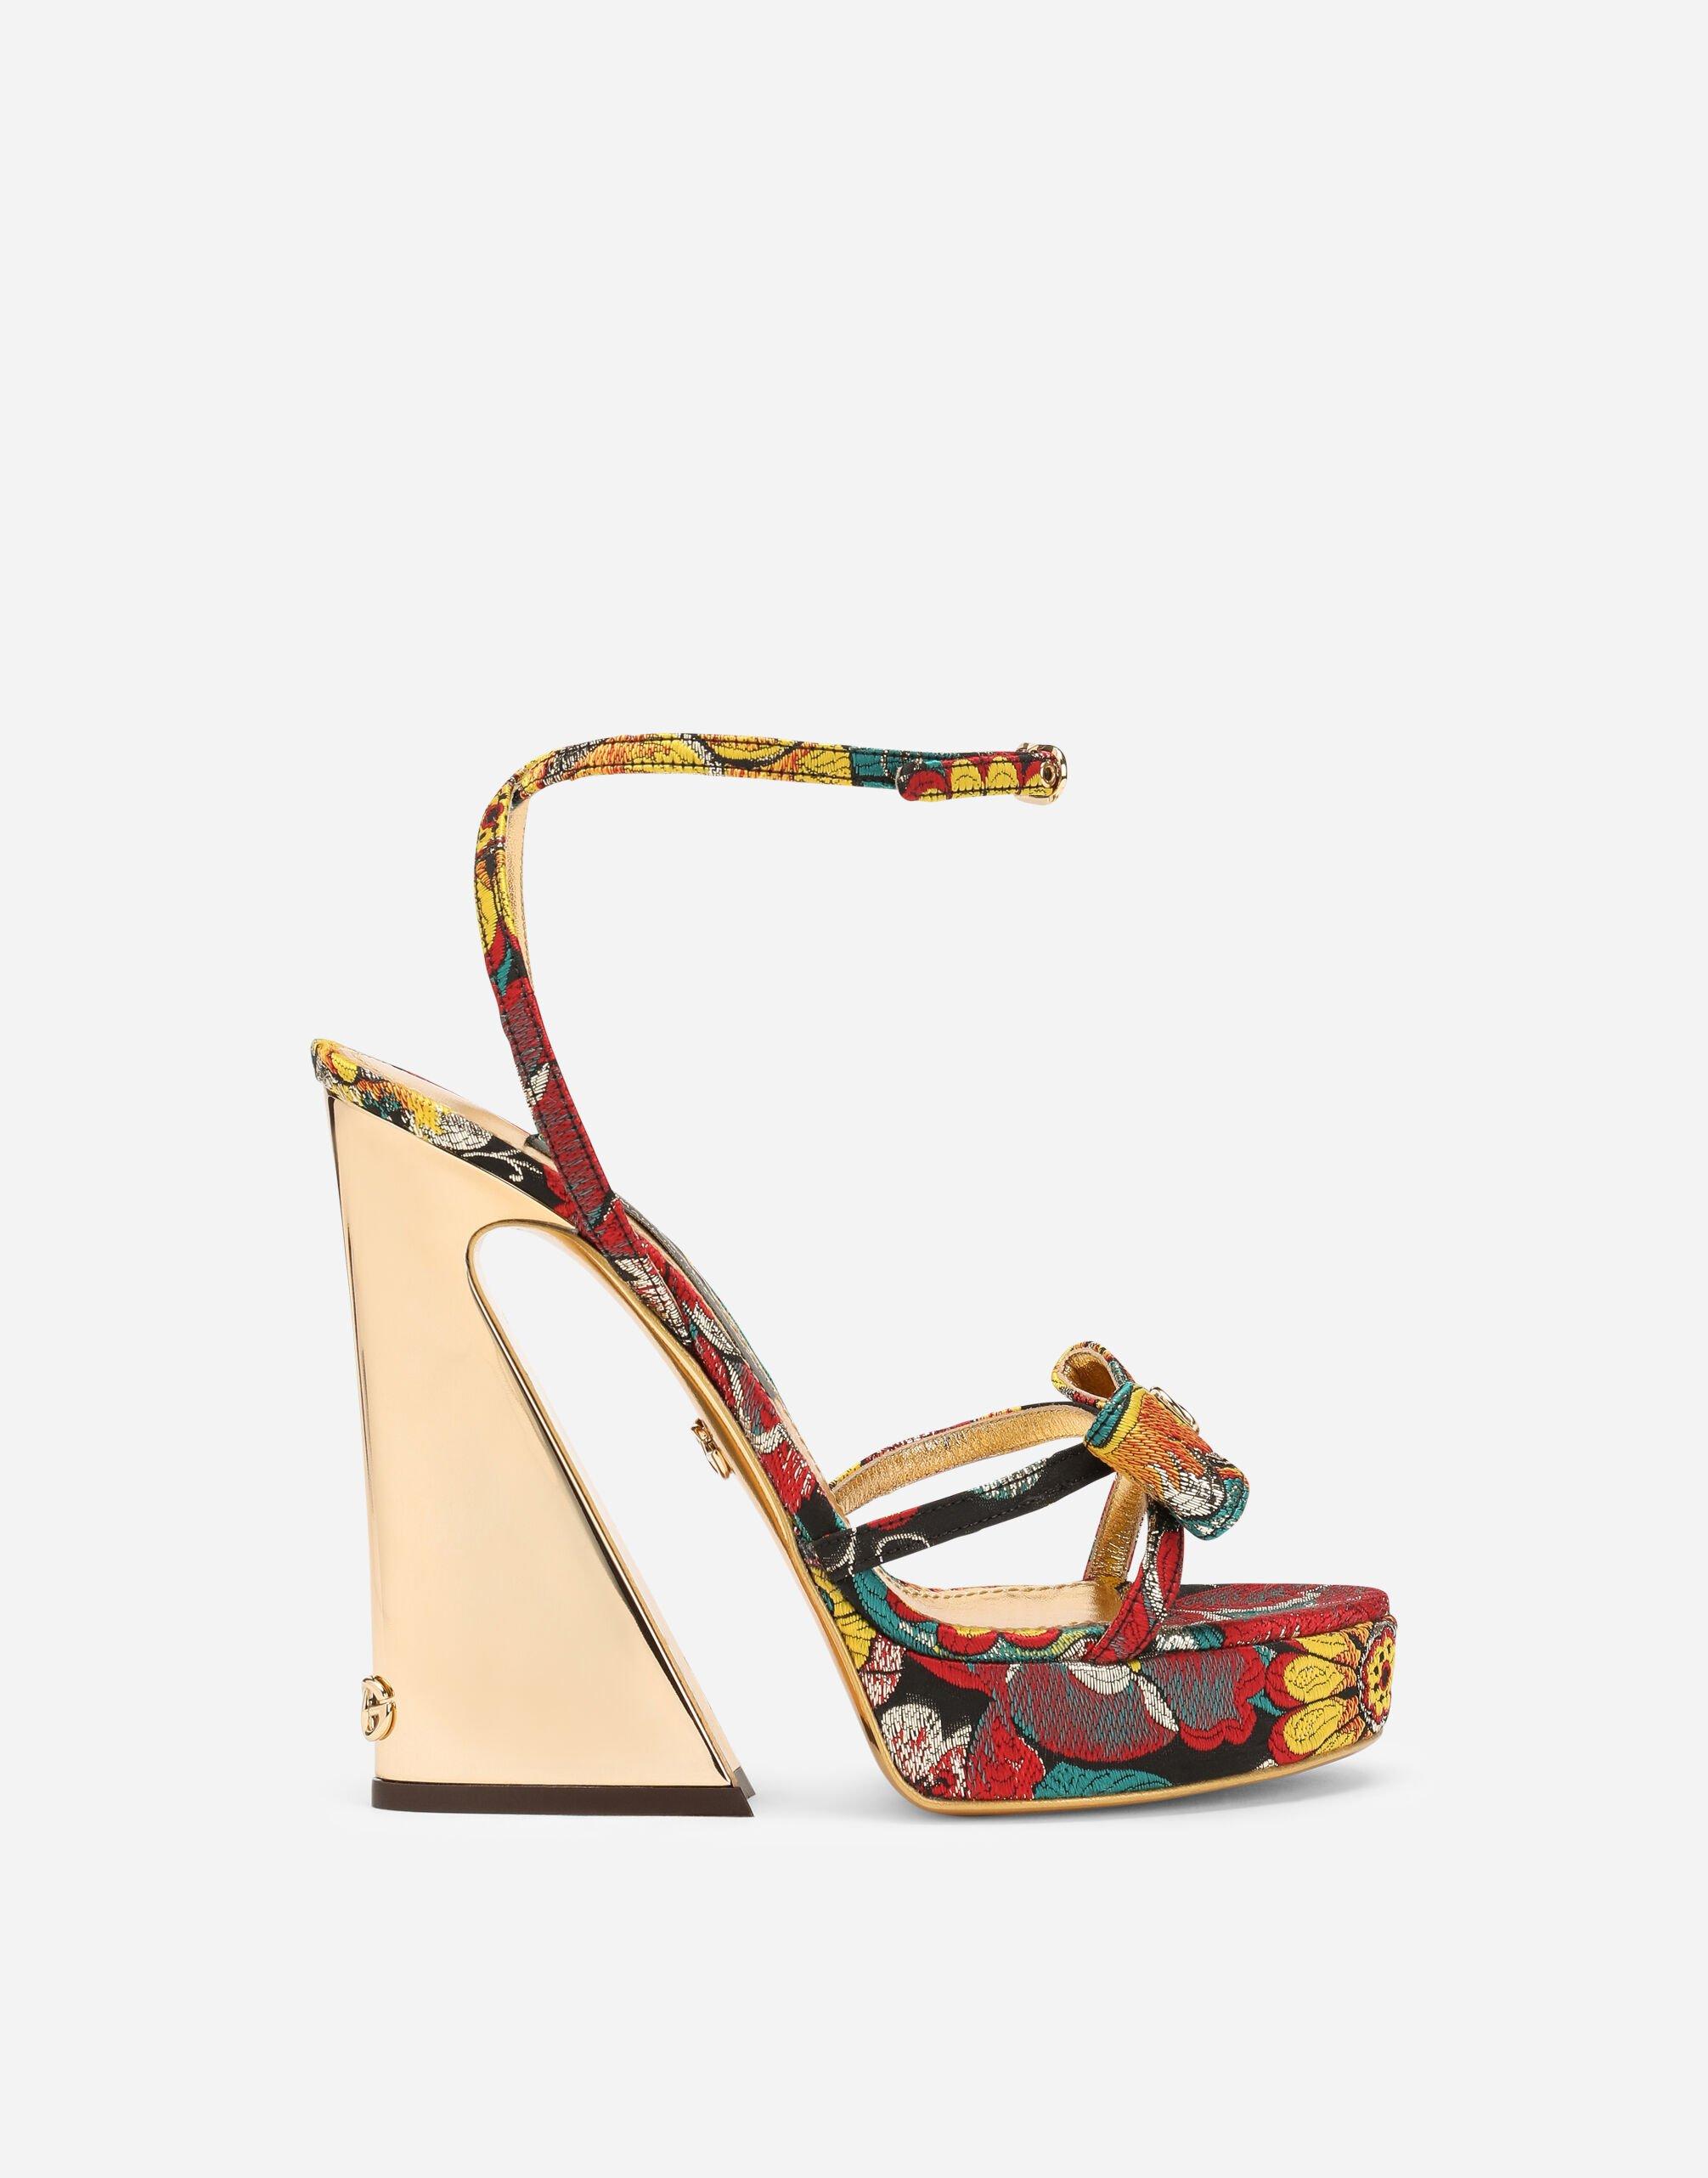 DOLCE & GABBANA Kids PVC Girl Pink Cage Flat Sandals Shoes EU21 / US5.5 RRP  $250 | eBay